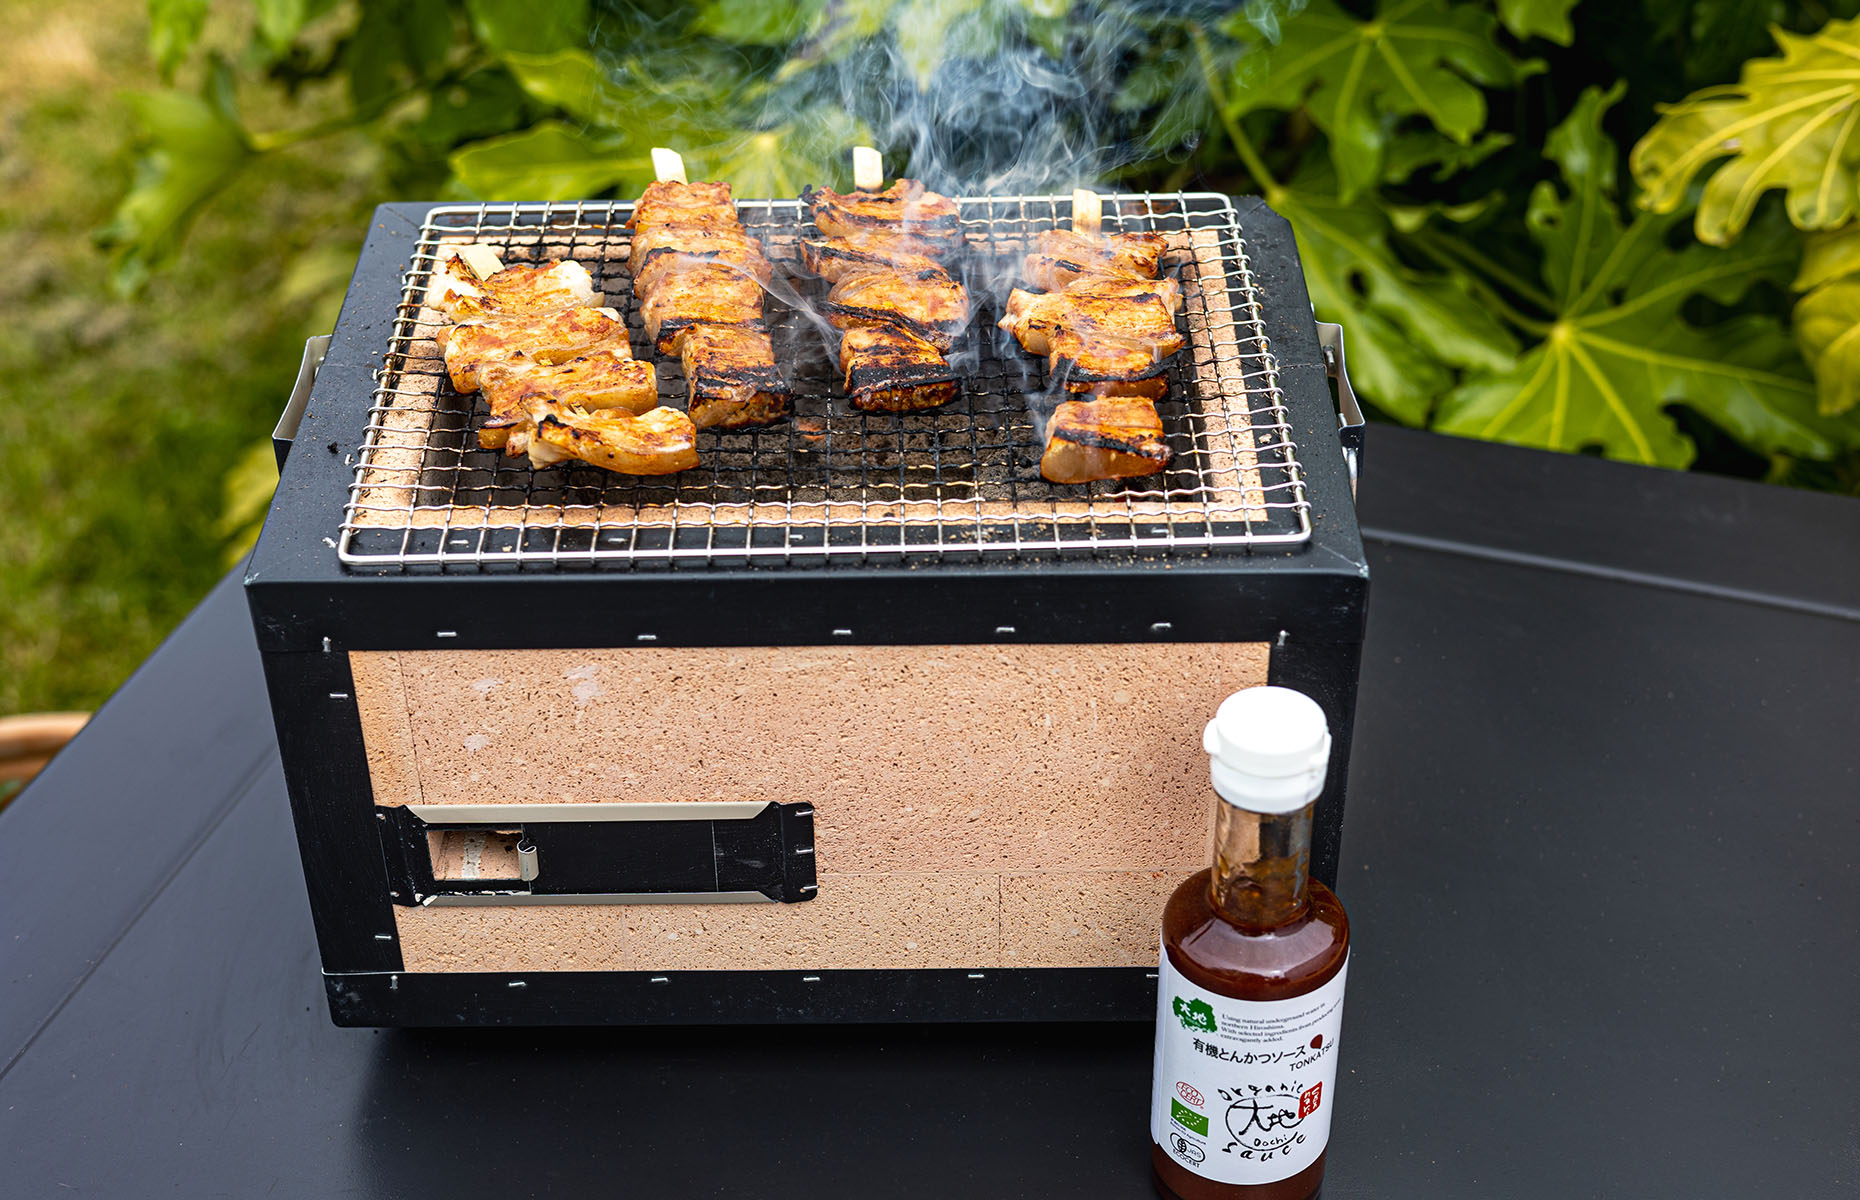 The Konro Grill Barbecue Set (Image: The Wasabi Company)